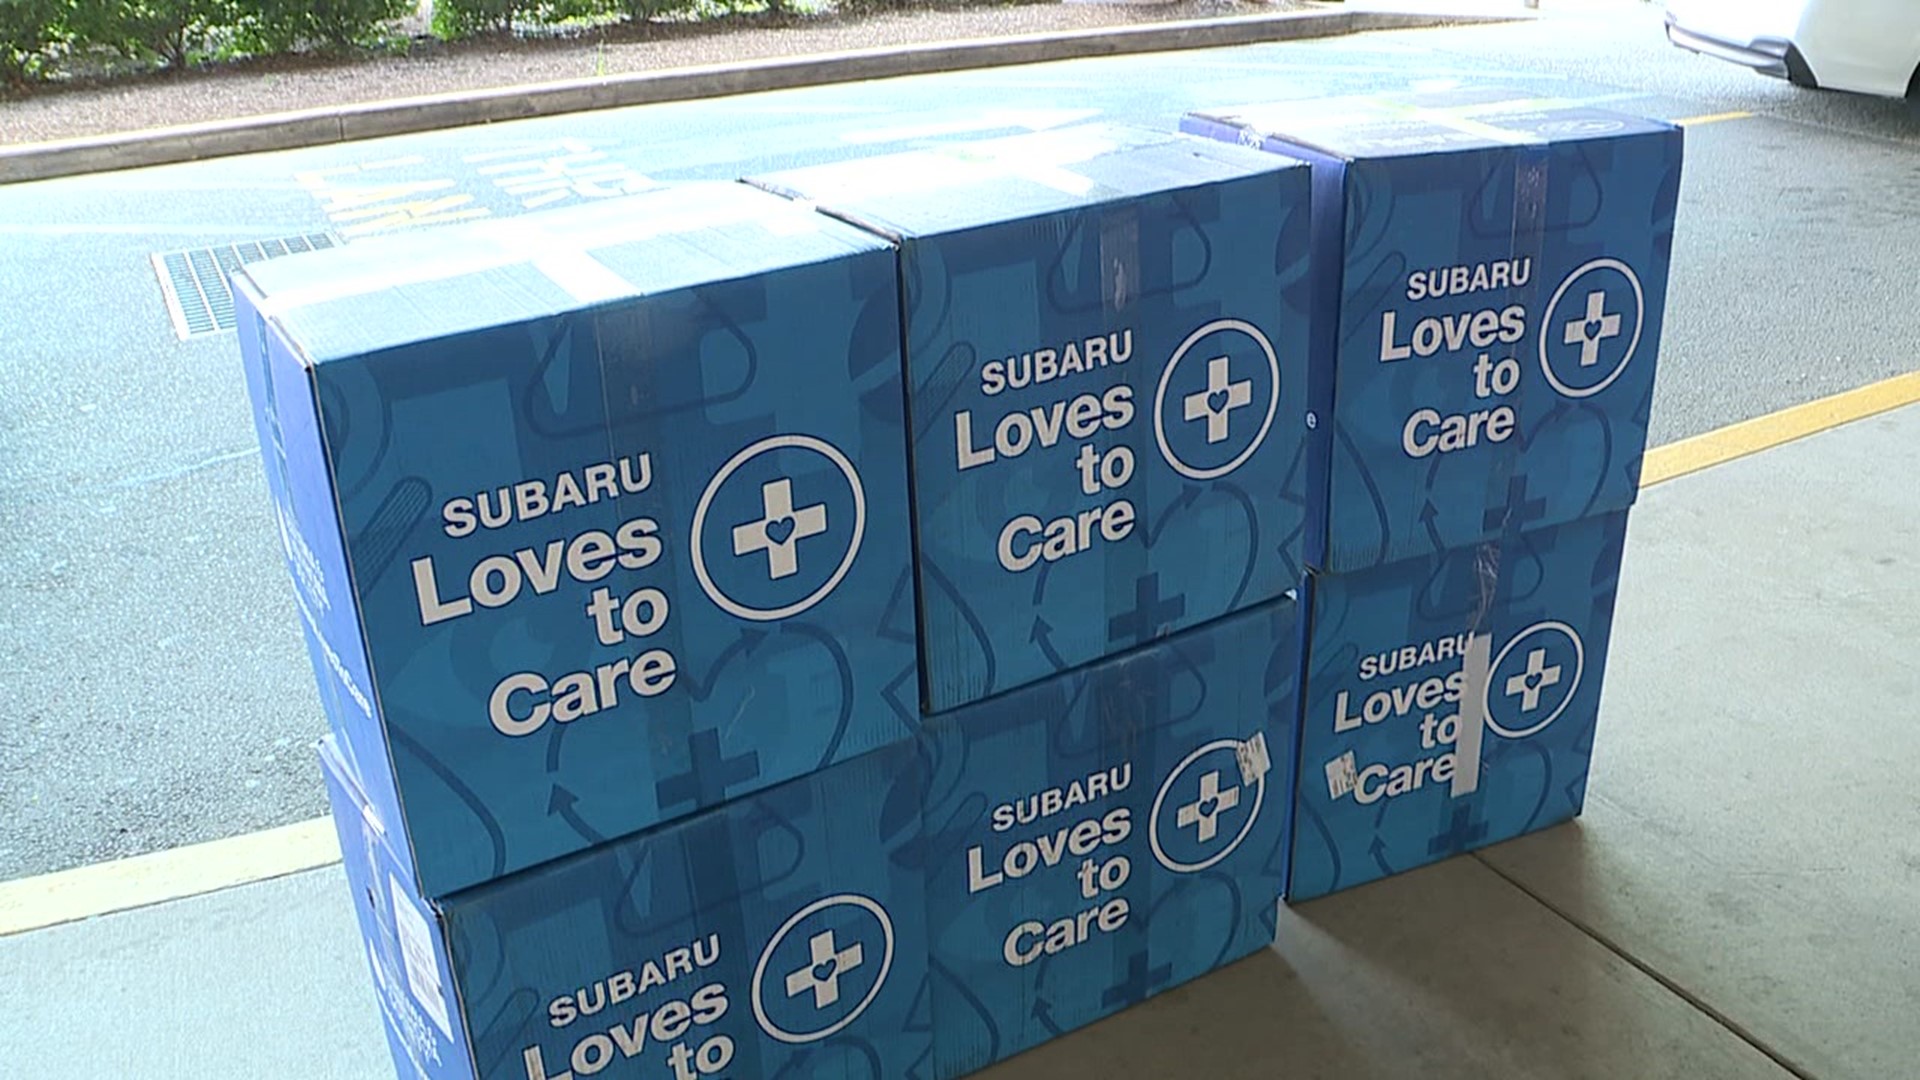 The donation is part of Minooka Subaru's "Love to Care" program.